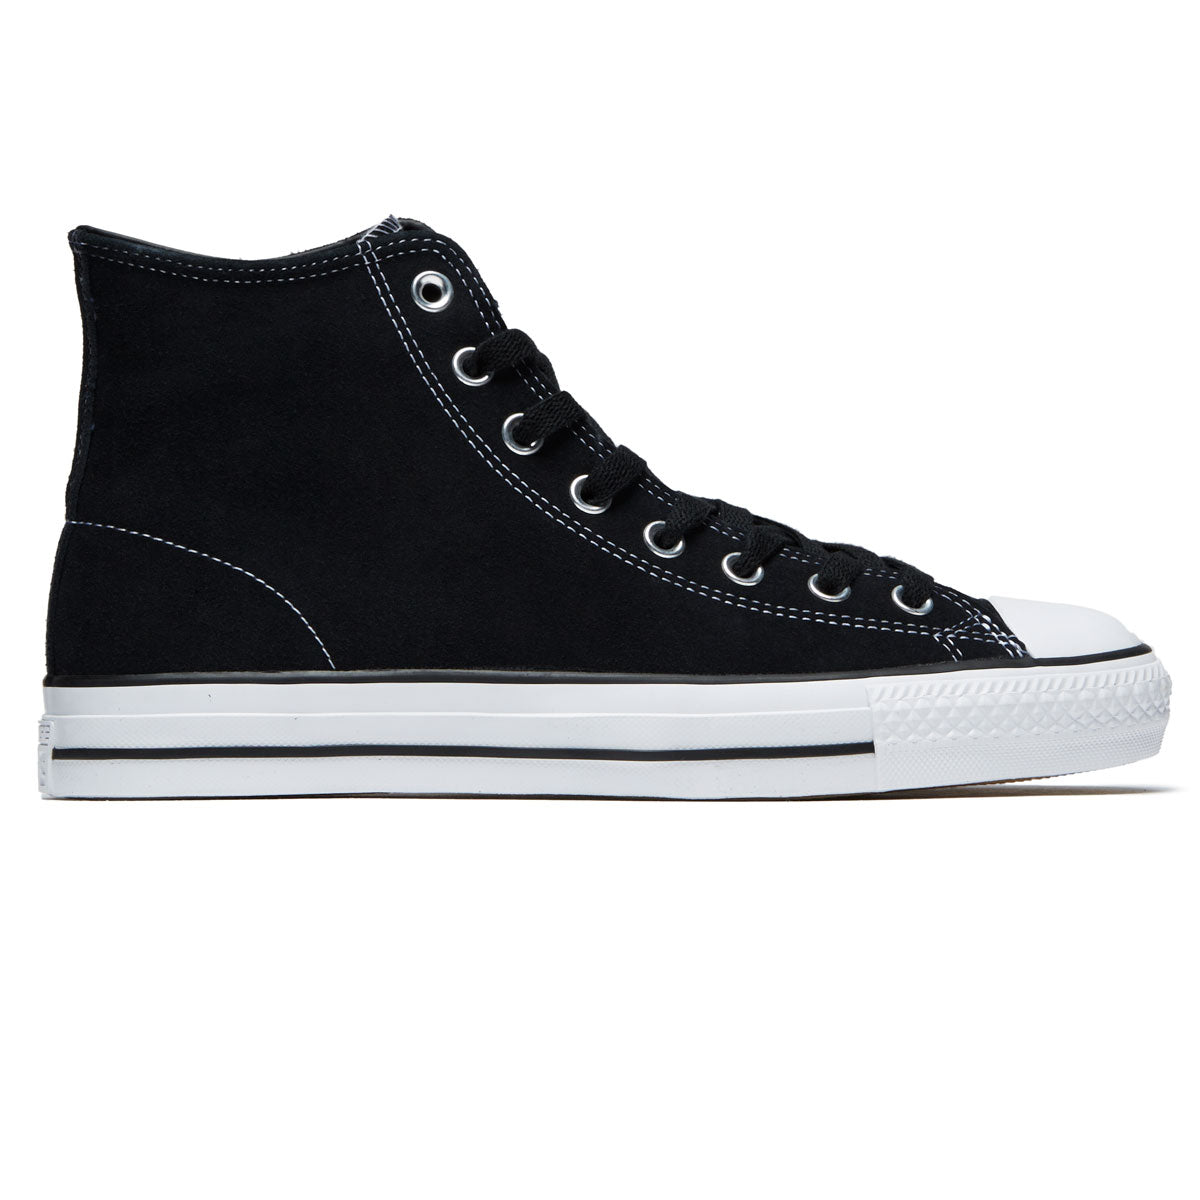 Converse Chuck Taylor All Star Pro Suede Hi Shoes - Black/Black/White